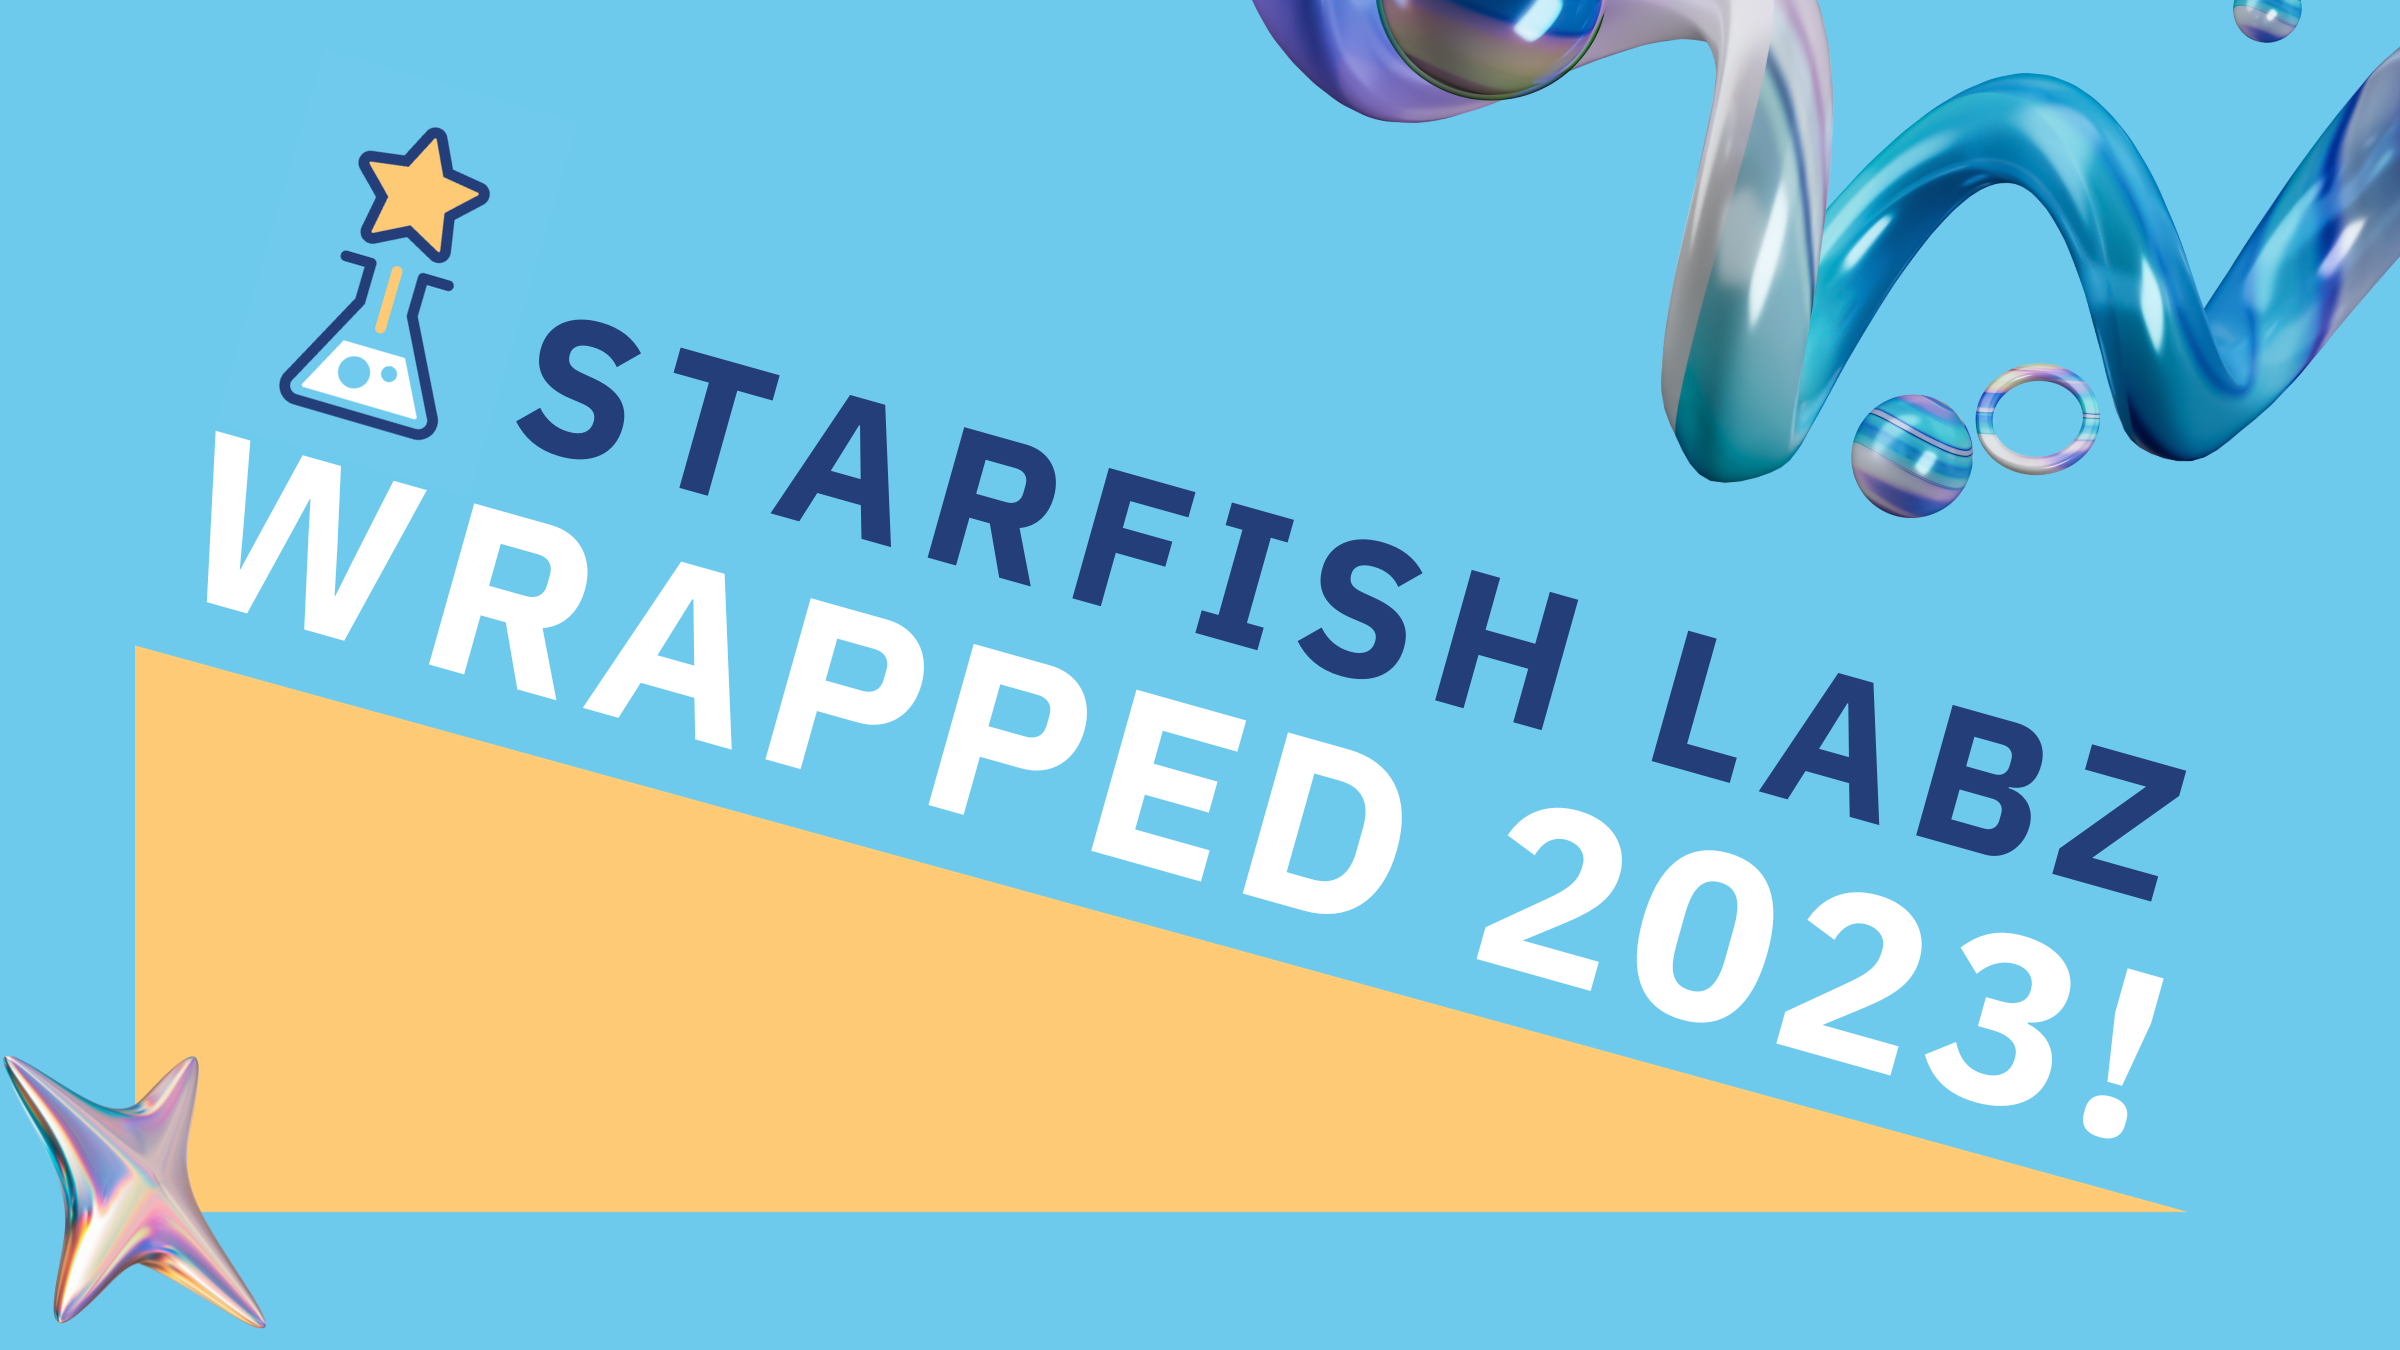 Starfish Labz Wrapped 2023! รวม 10 highlights ของ Starfish